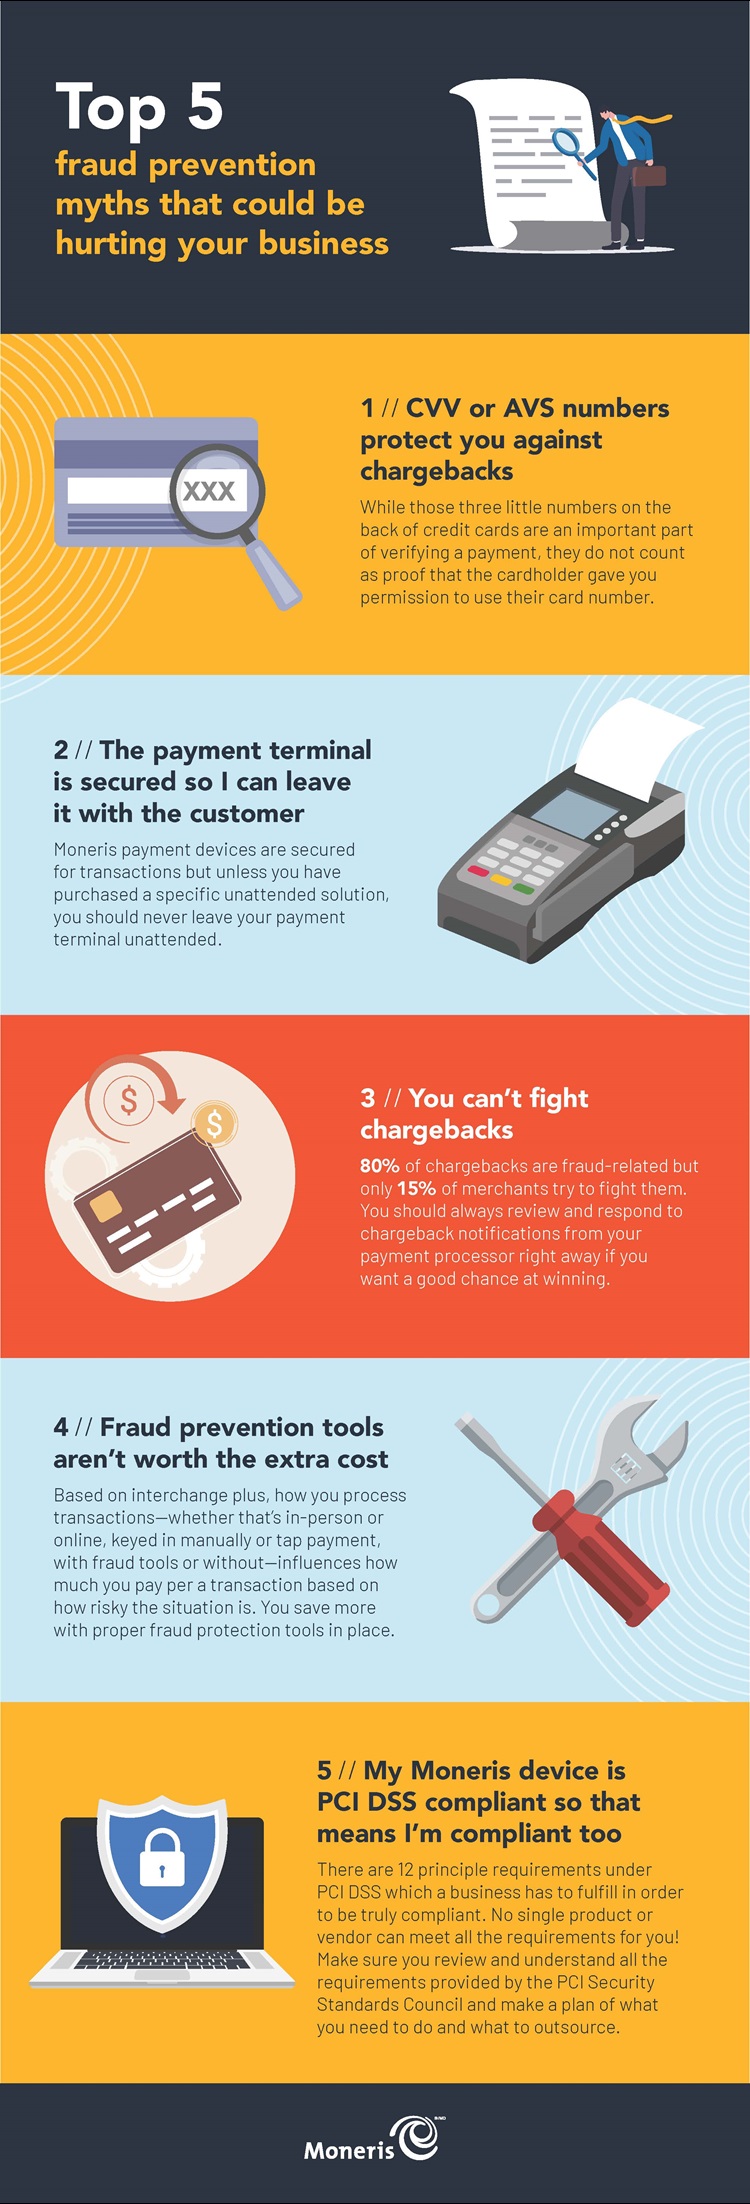 Top 5 fraud prevention myths 